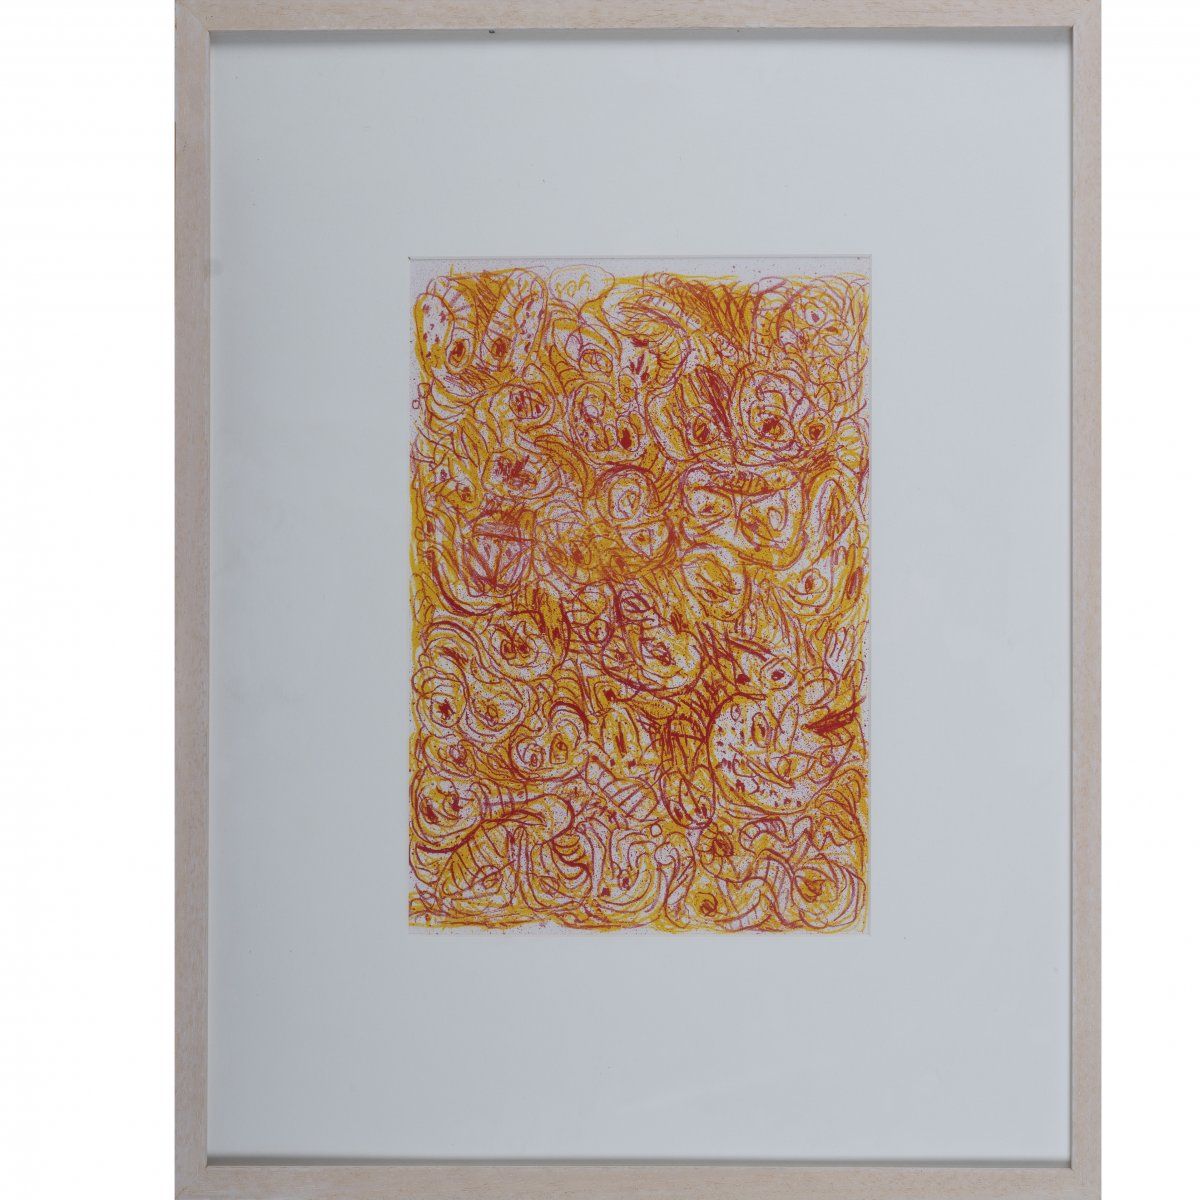 Null 皮埃尔-阿勒钦斯基（1927年，布鲁塞尔，现居法国），《无题》选自《一分钱的生活》，1964年，彩色平版画，编织纸。38.0 x 26.0厘米（垫子剪&hellip;